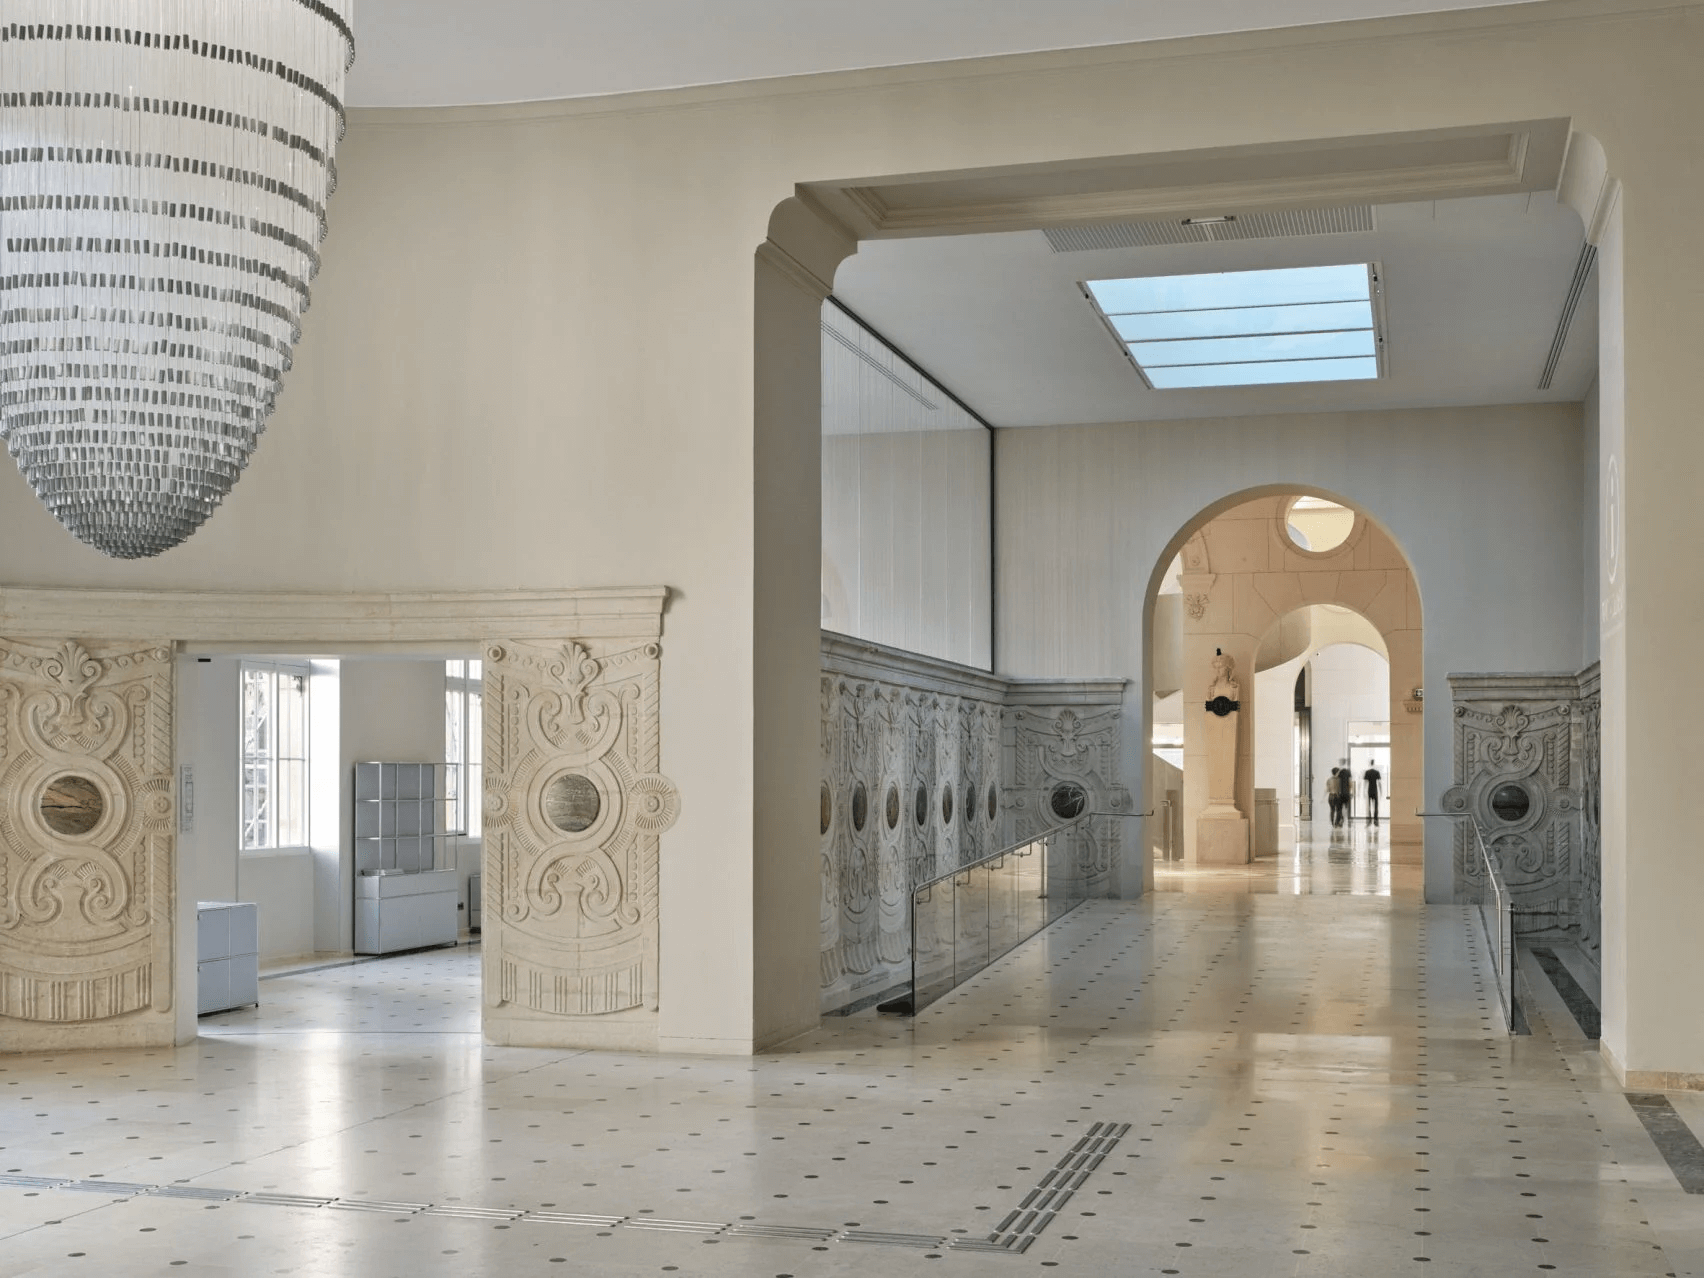 national library bruno gaudin architectes architecture paris france dezeen 2364 col 9 1704x1278 1